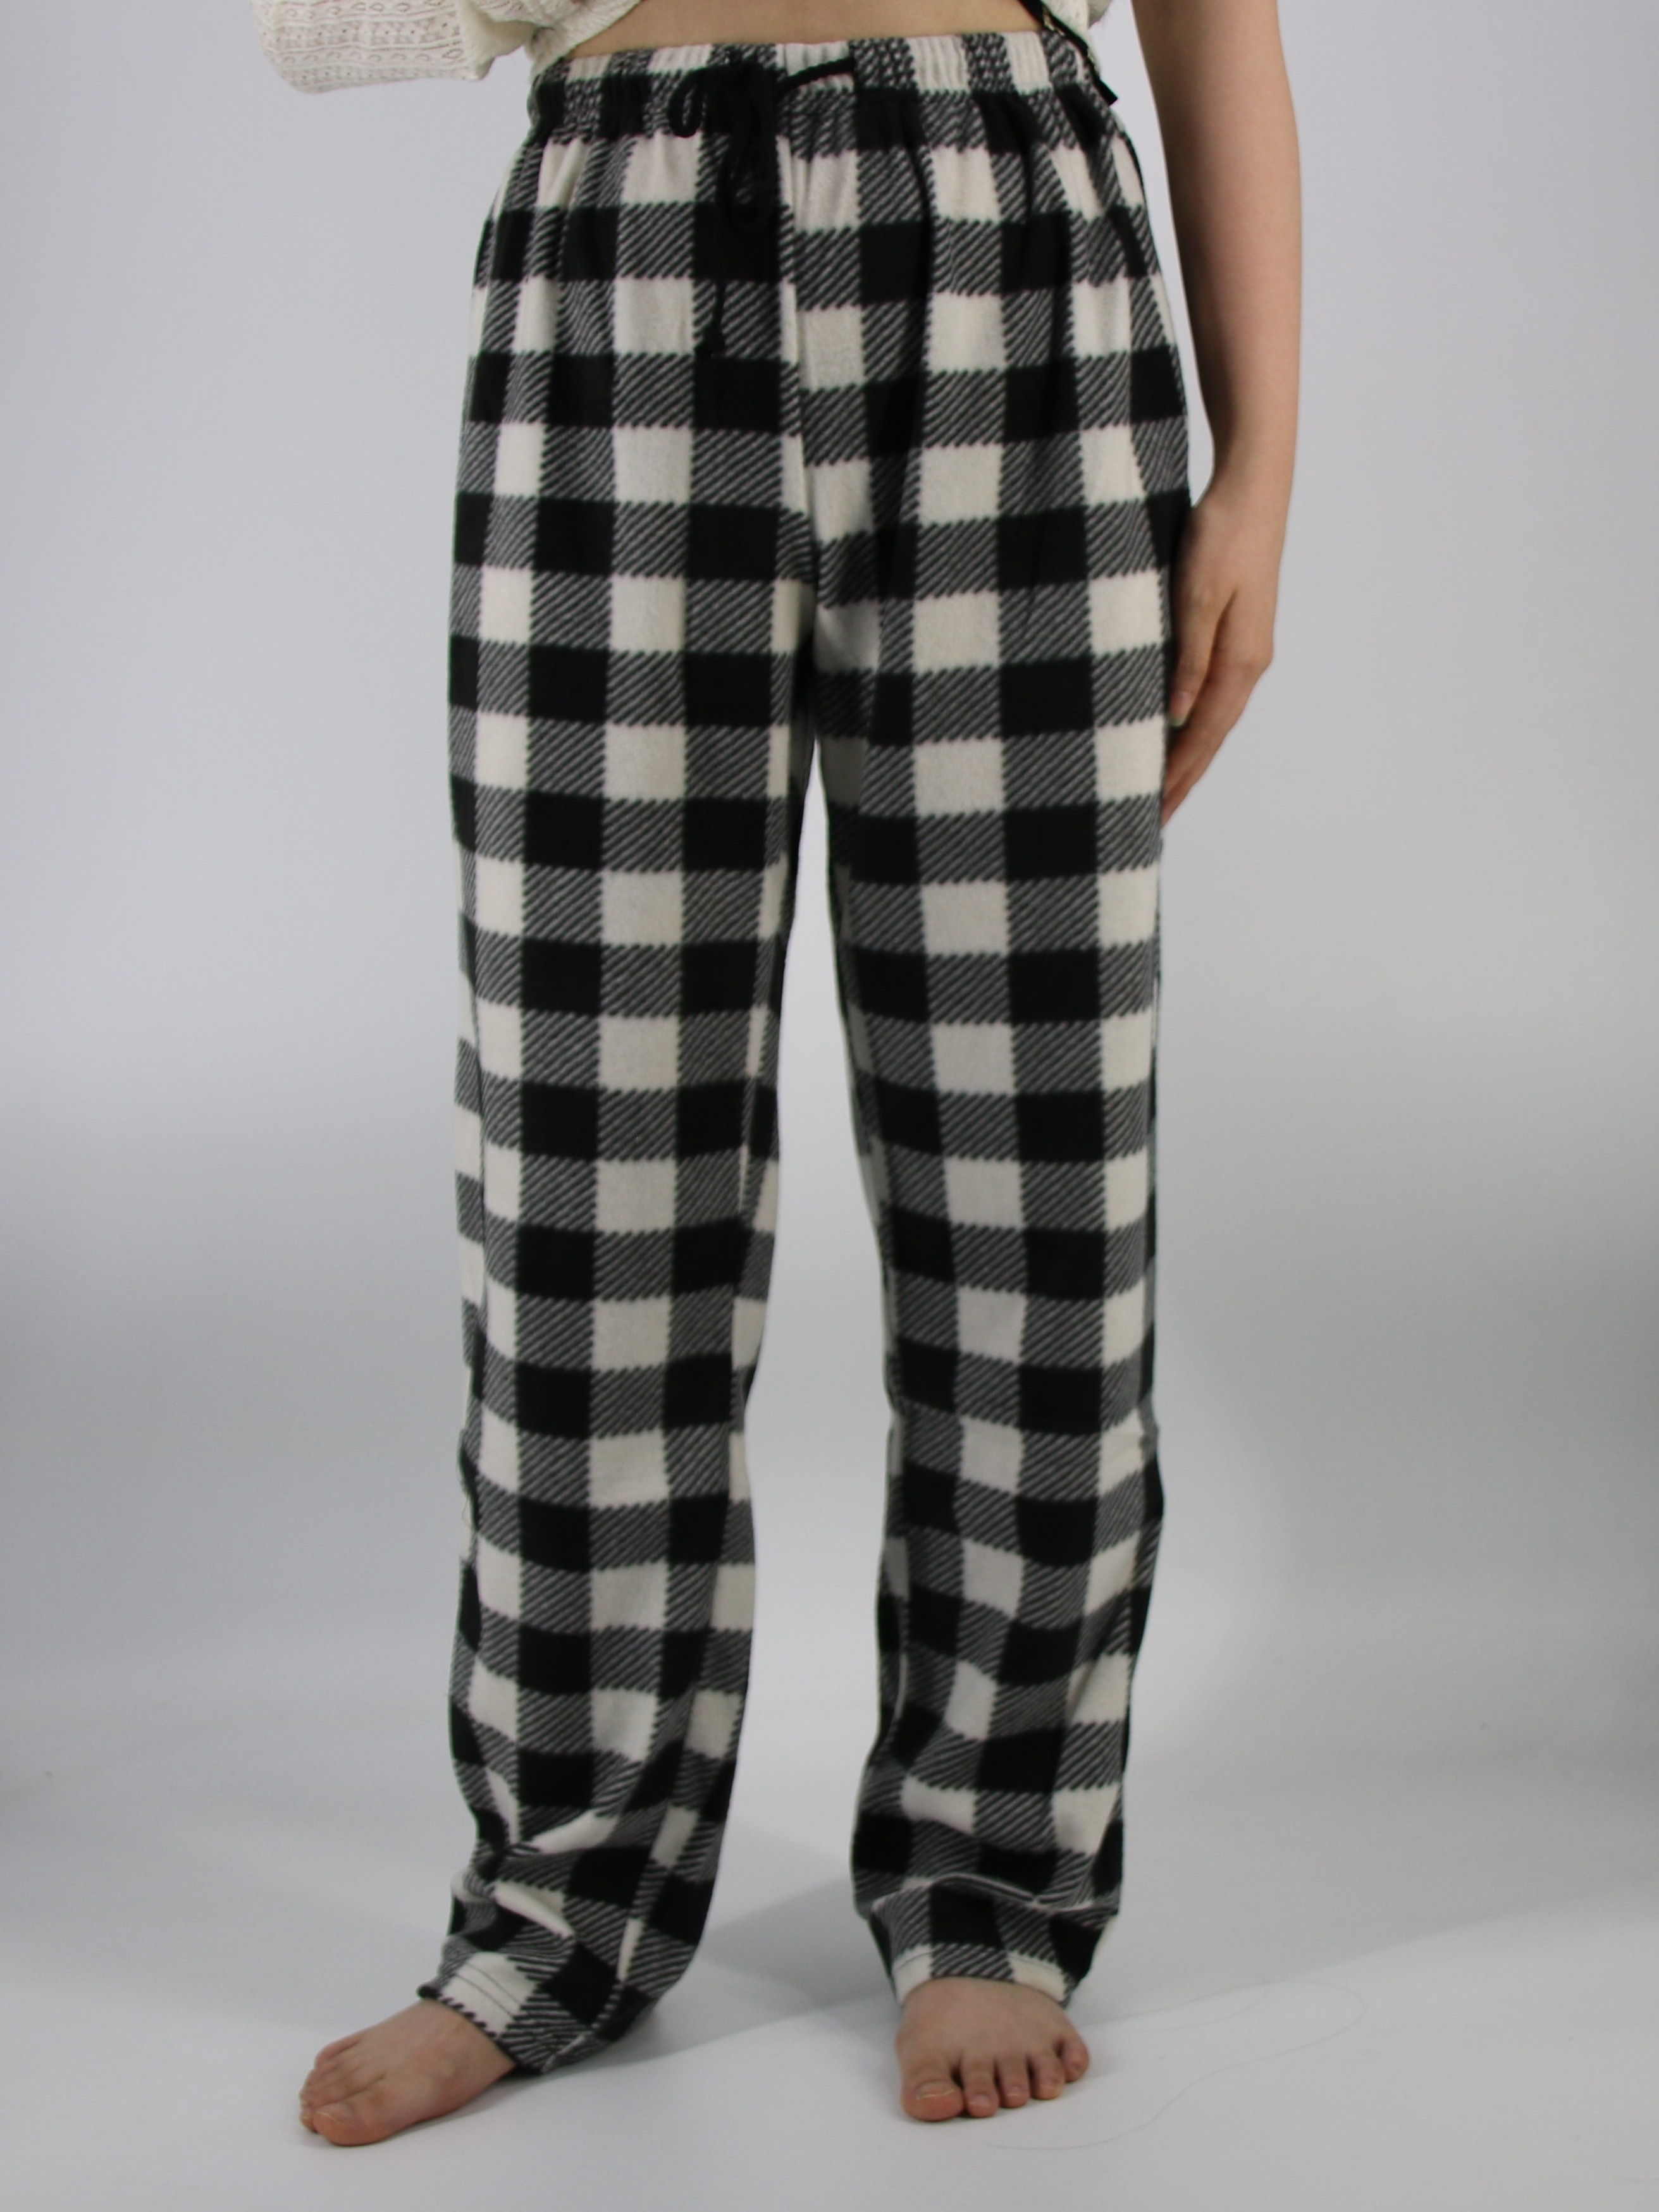  Pantalones de pijama de franela para mujer, pantalones